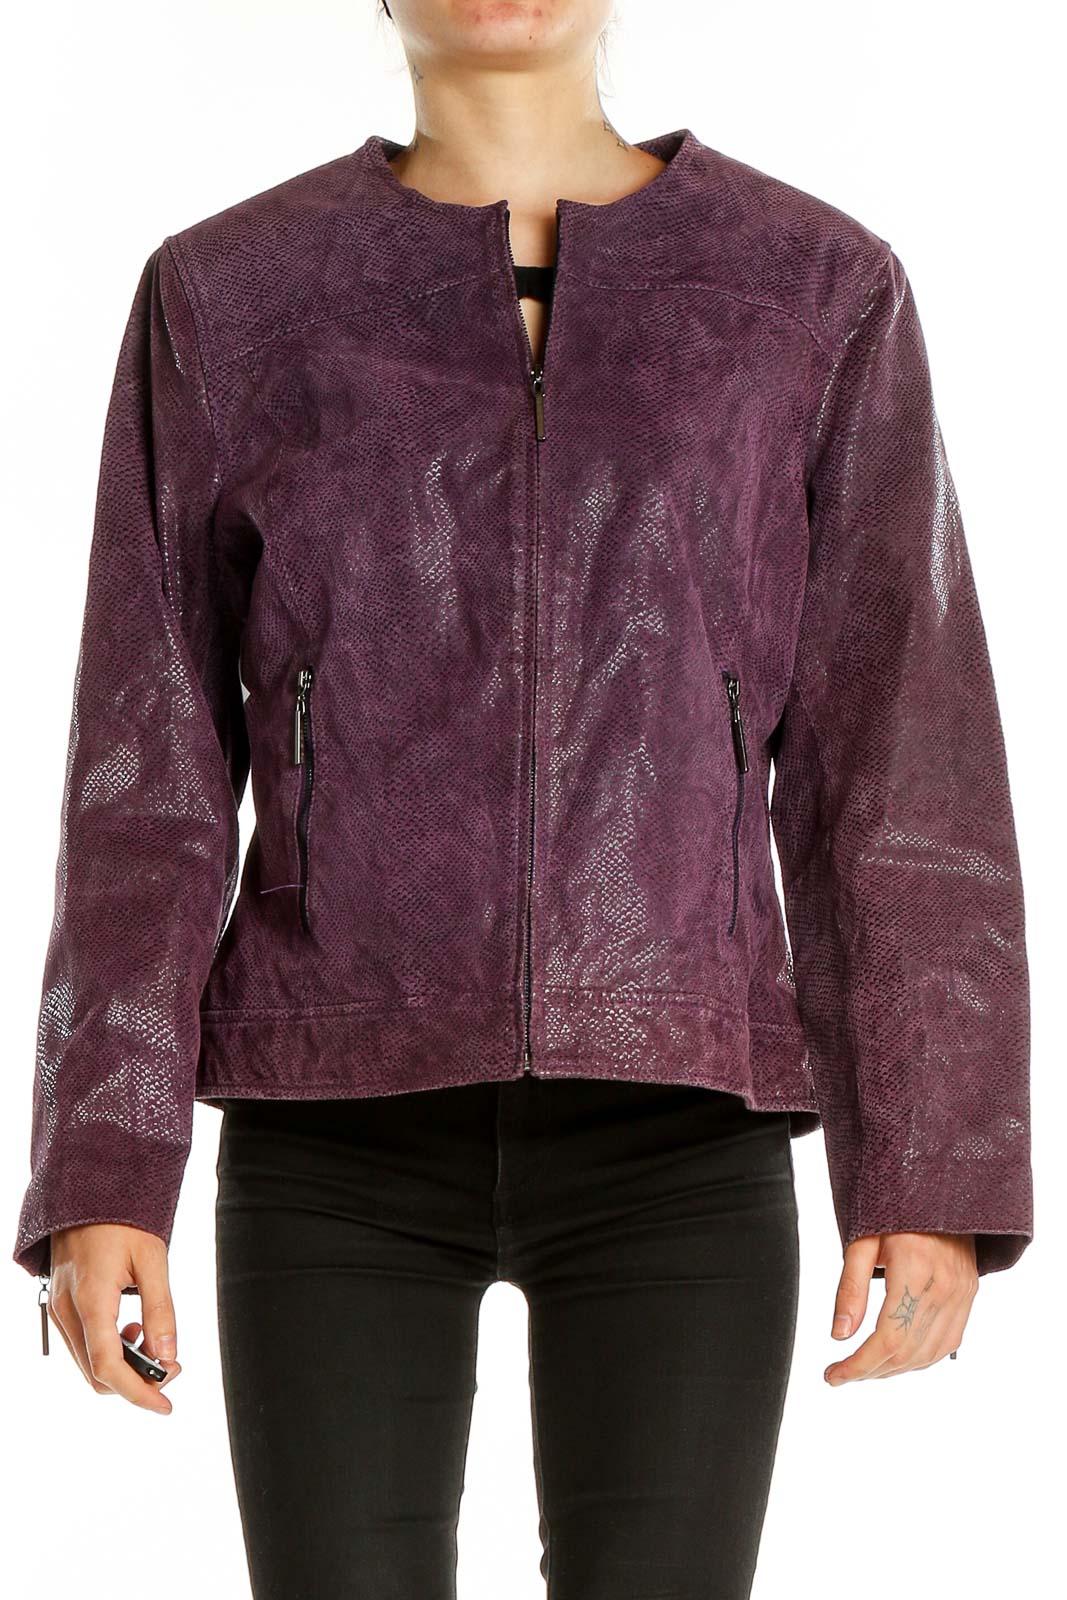 Purple Leather Jacket Front